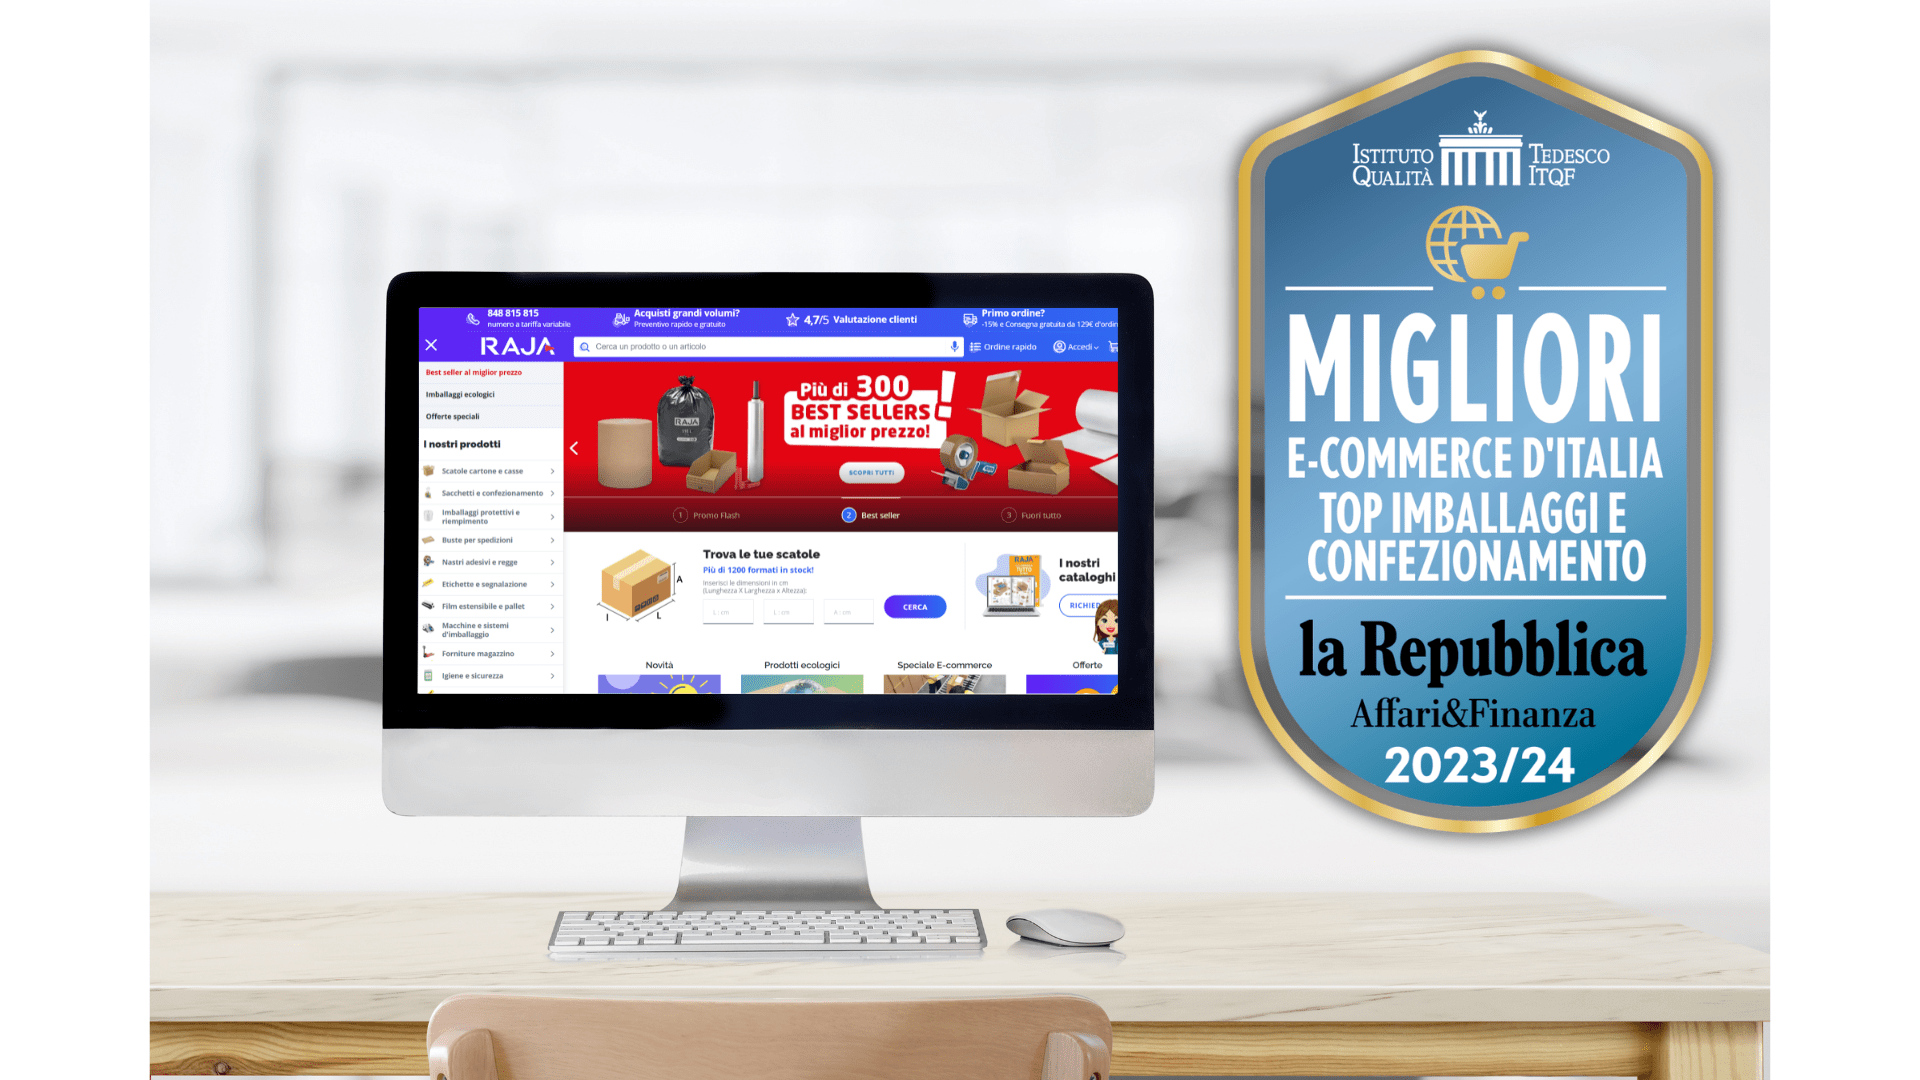 RAJA tra i migliori e-commerce d'Italia